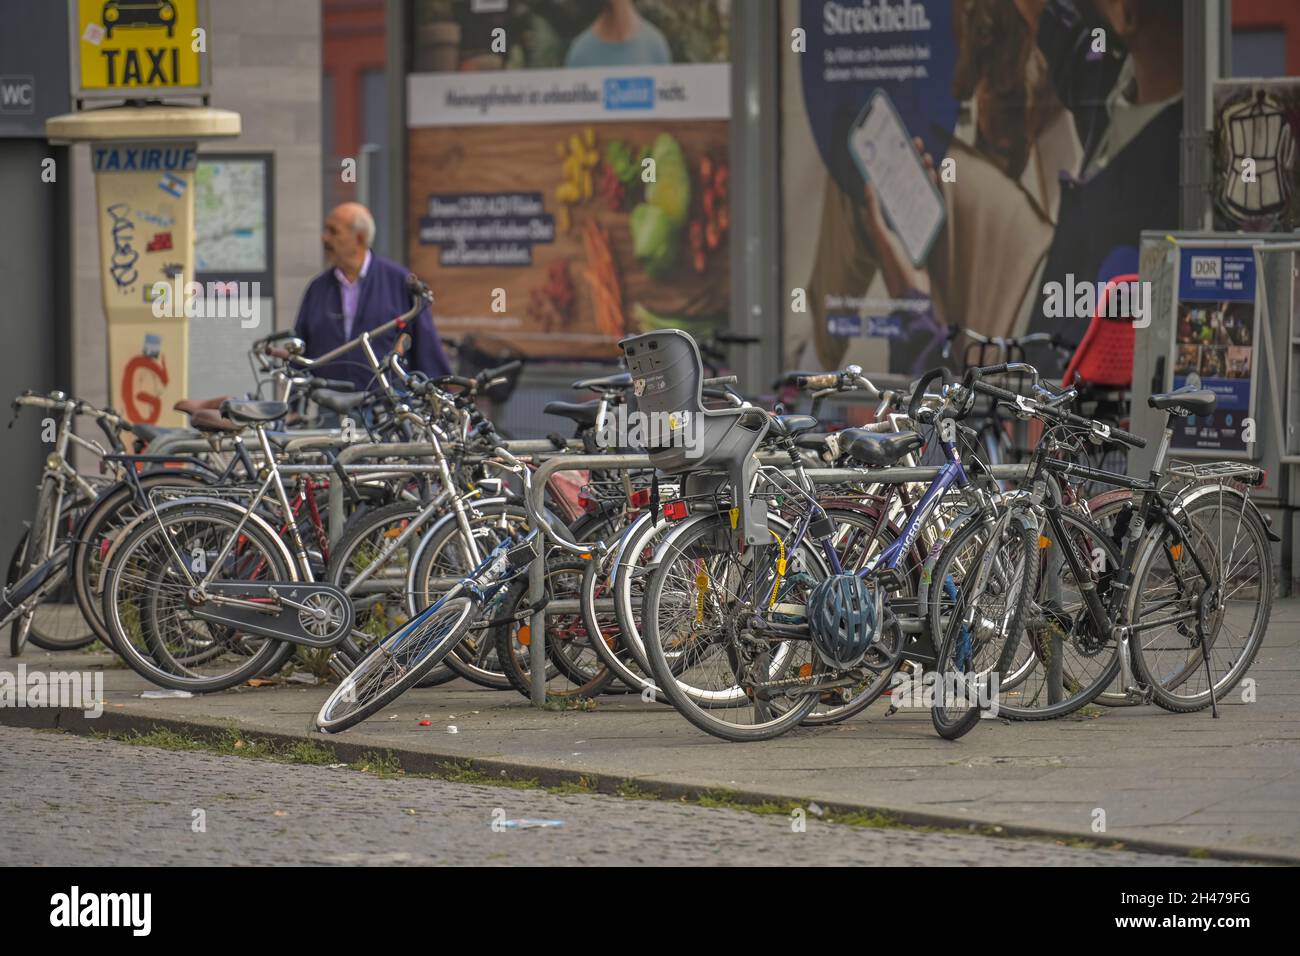 Fahrrad-Parkplatz, Hermannstraße, Neukölln, Berlin, Deutschland Stock Photo